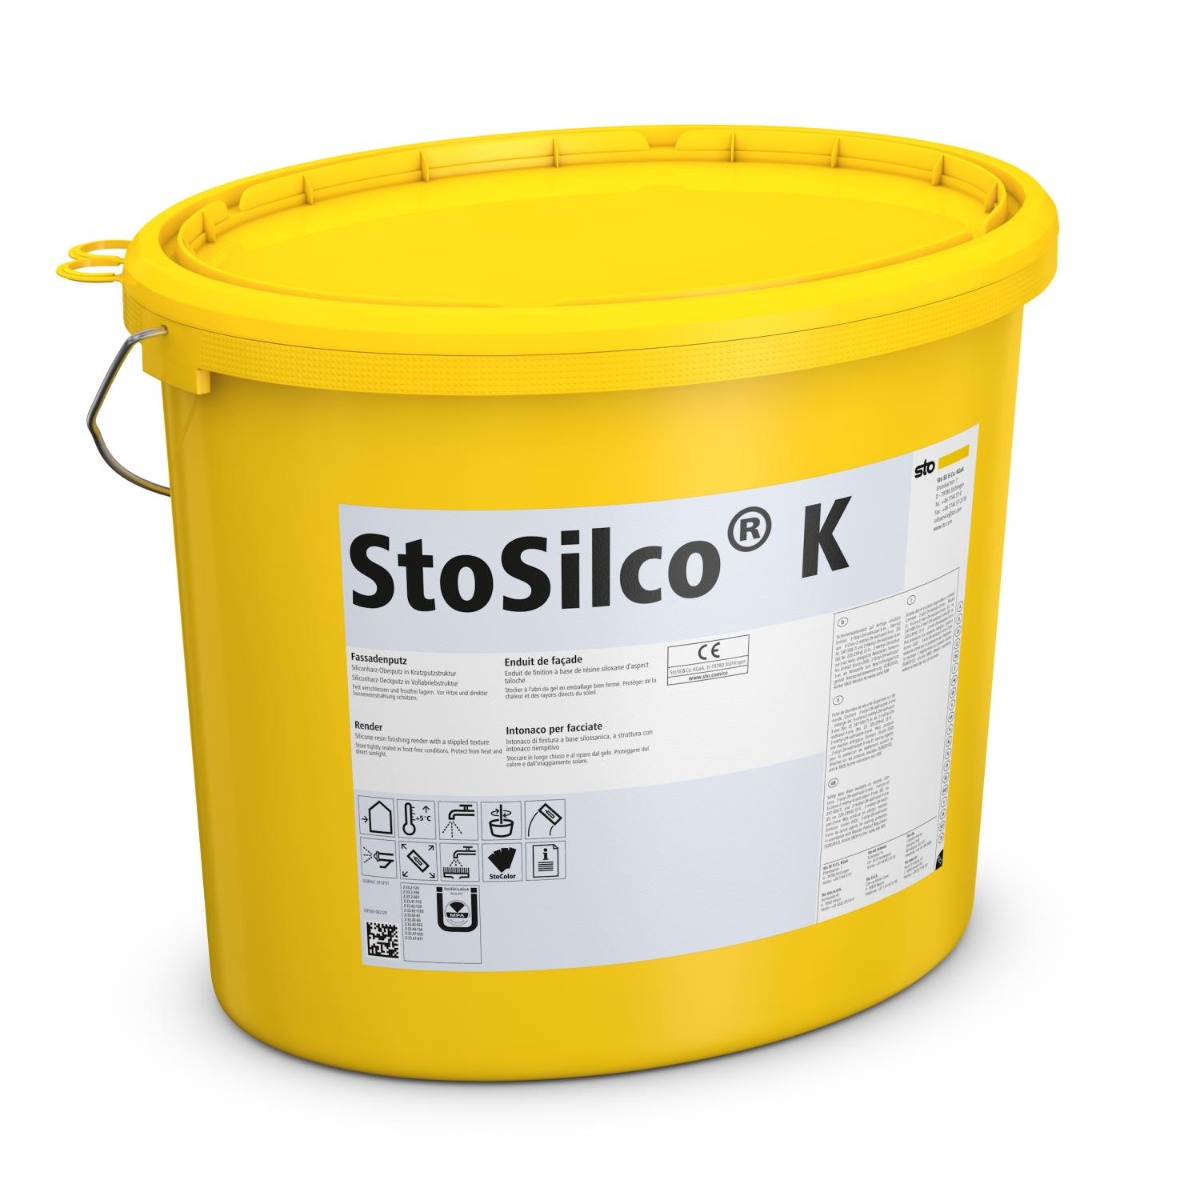 StoSilco K-25 kg Korn 1,0-Farbtonklasse III